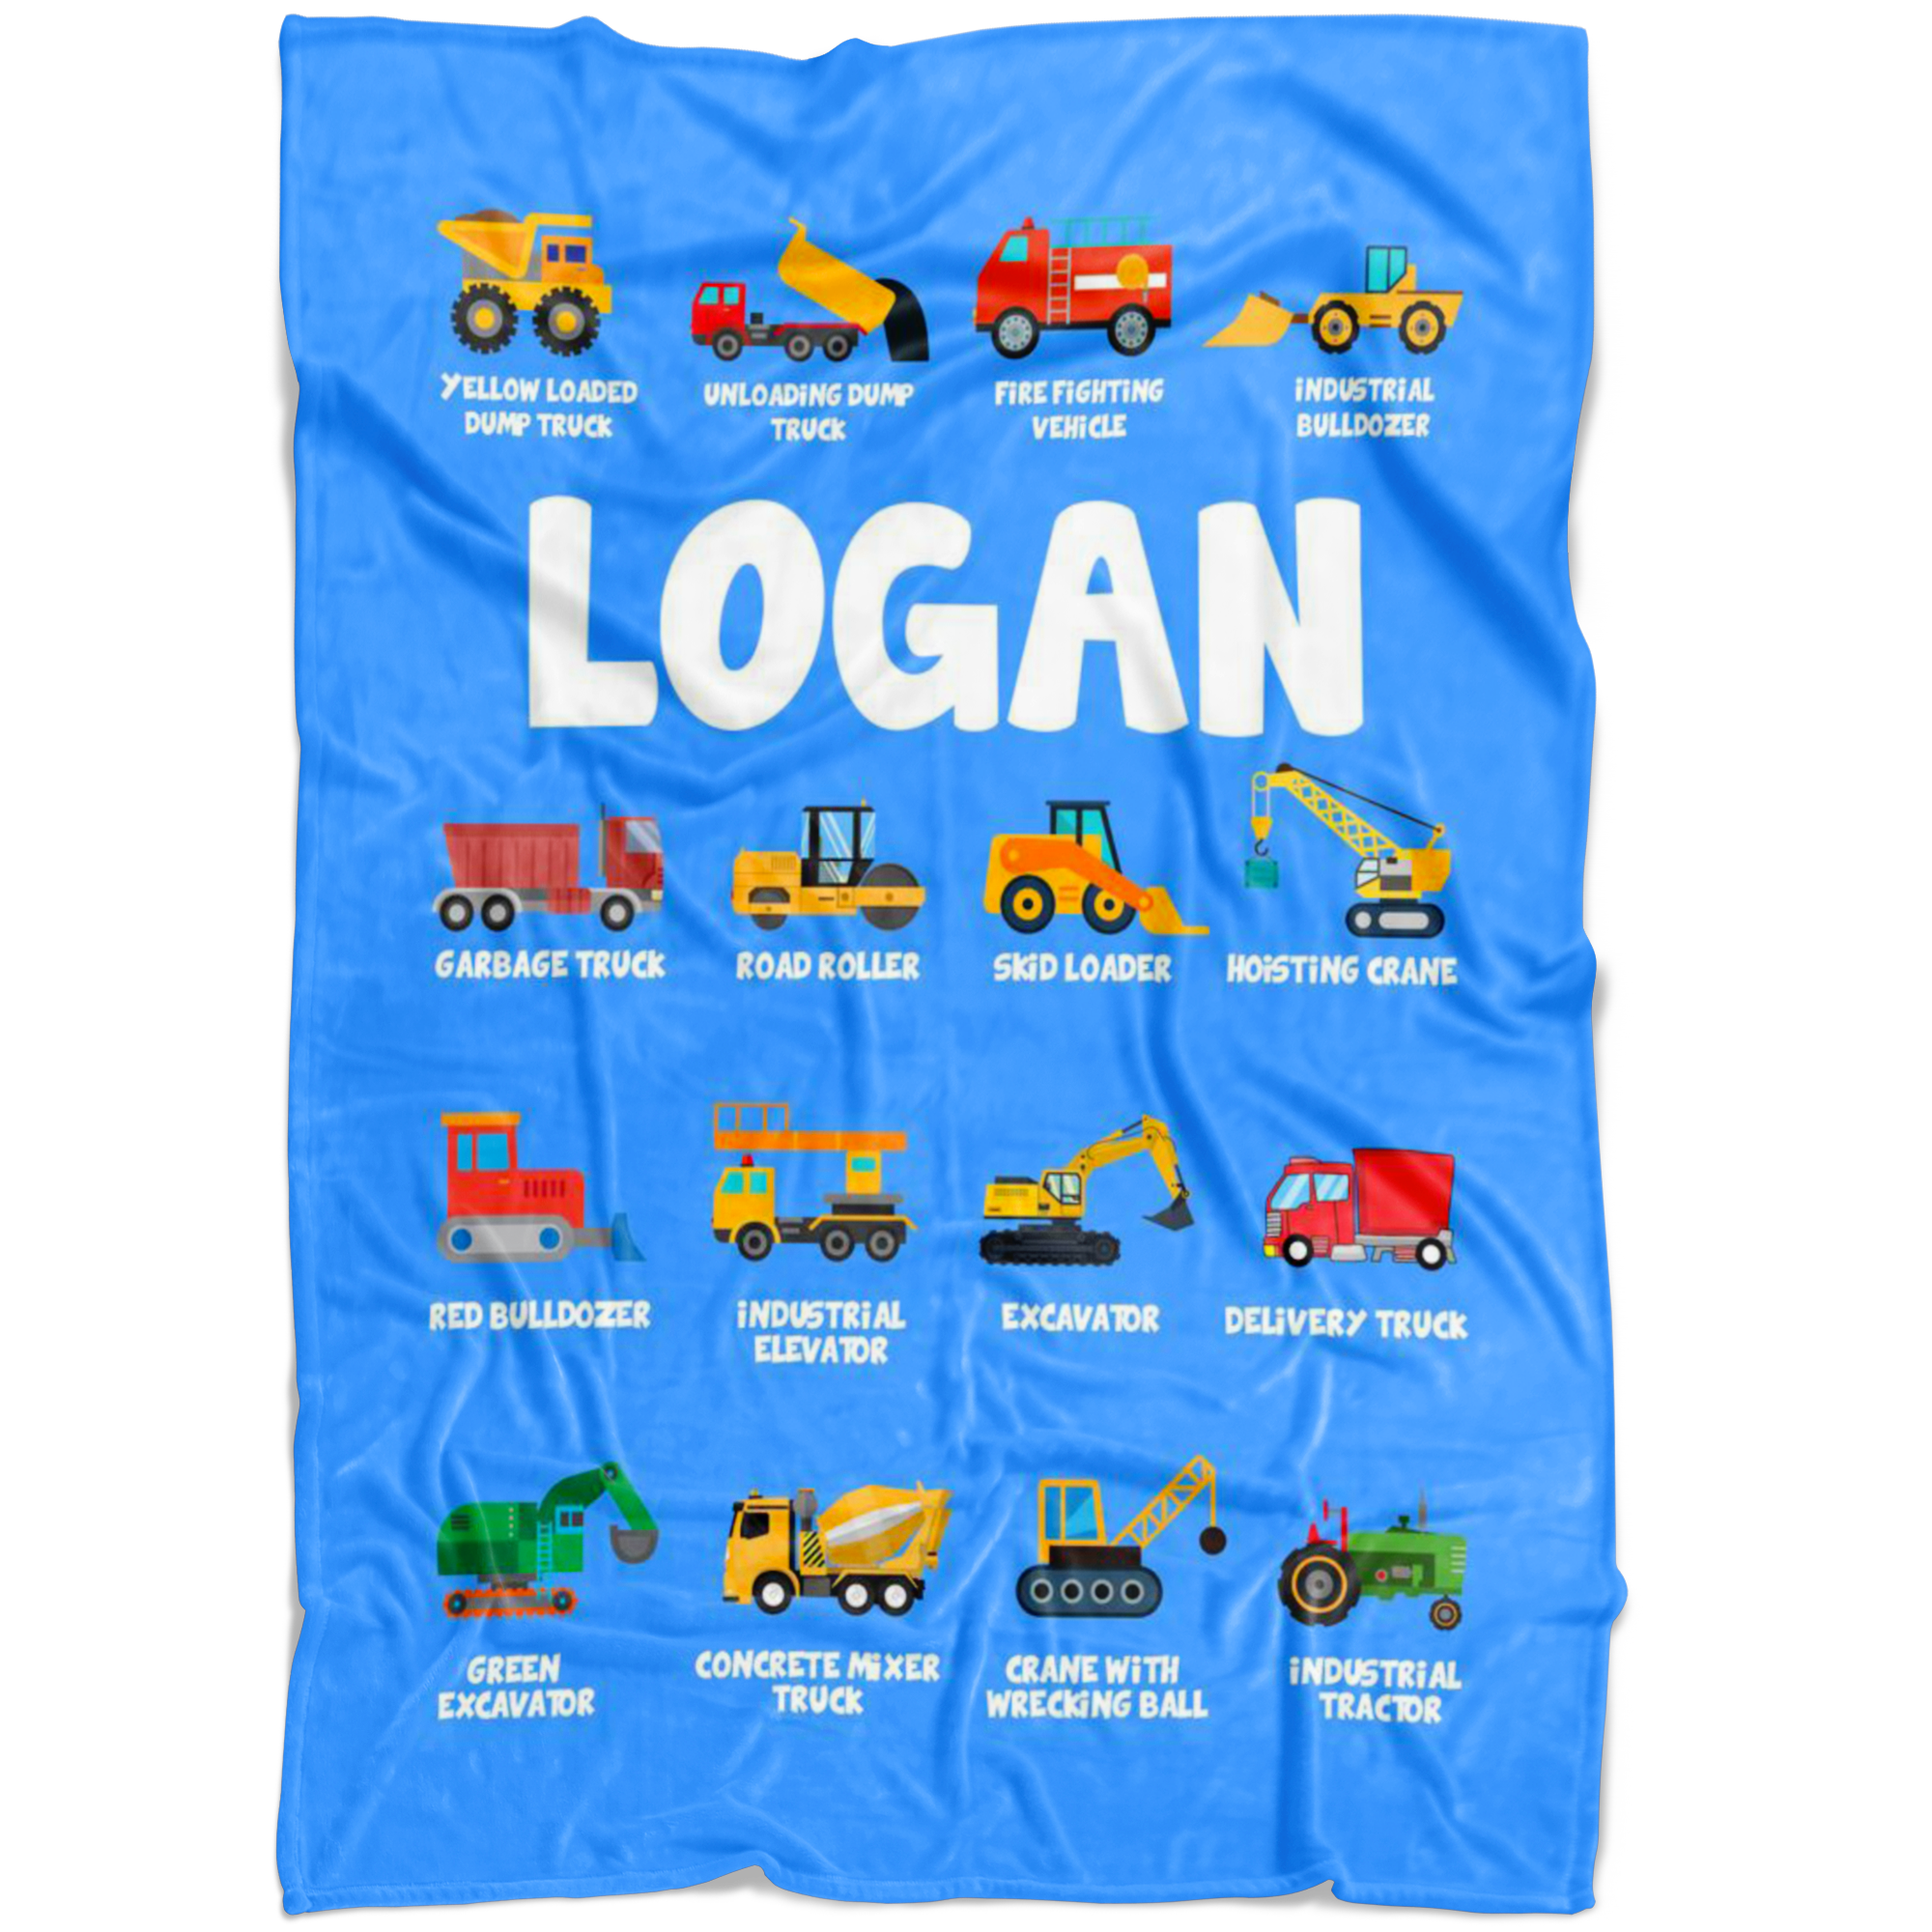 LOGAN Construction Blanket Blue